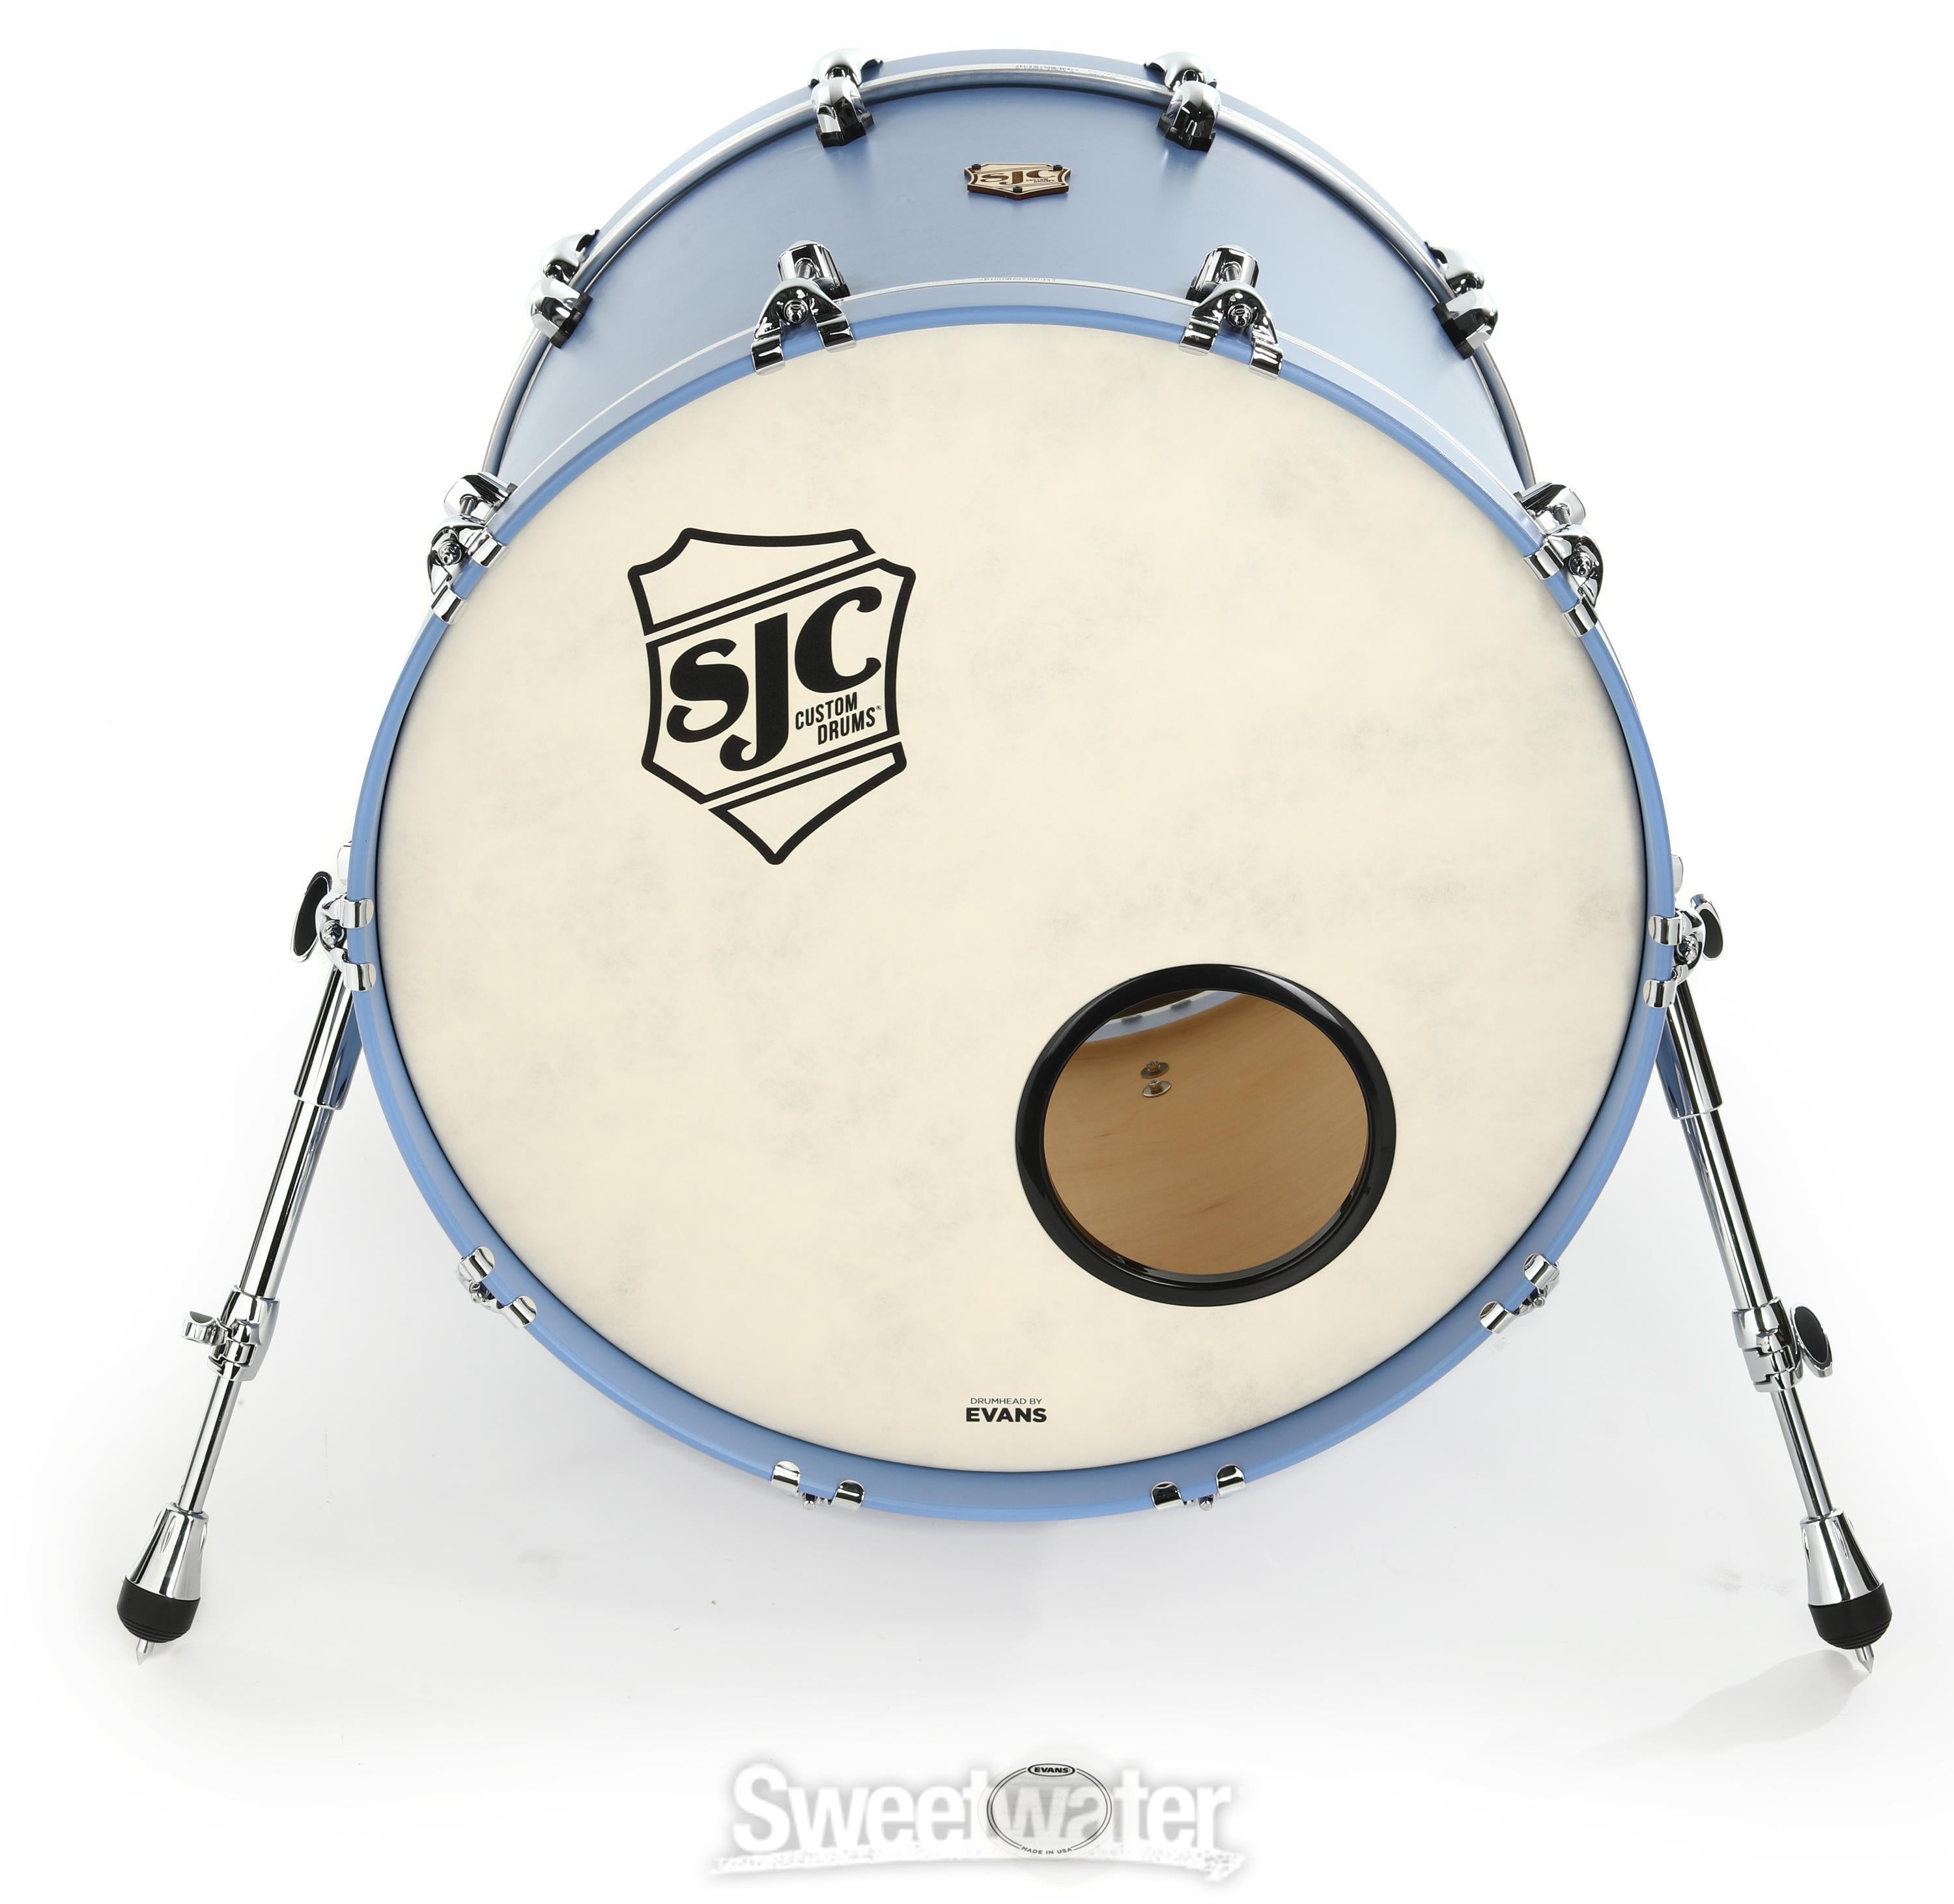 SJC Custom Drums Tour Series Bass Drum - 18 x 22-inch - Lavender Ash -  Sweetwater Exclusive